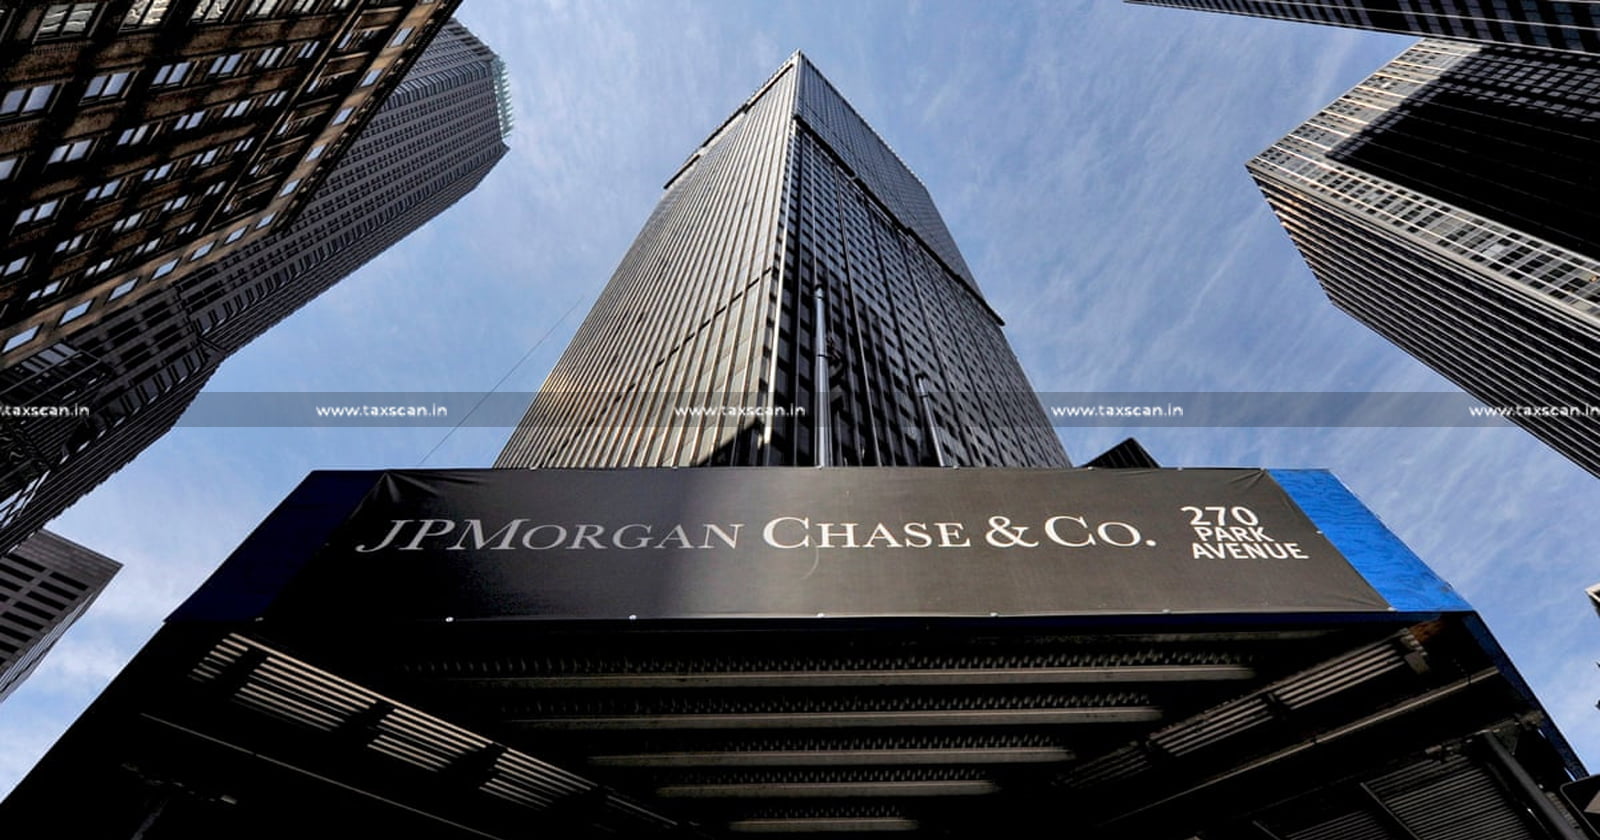 CA - job - Vacancy - JPMorgan Chase & Co - jobscan